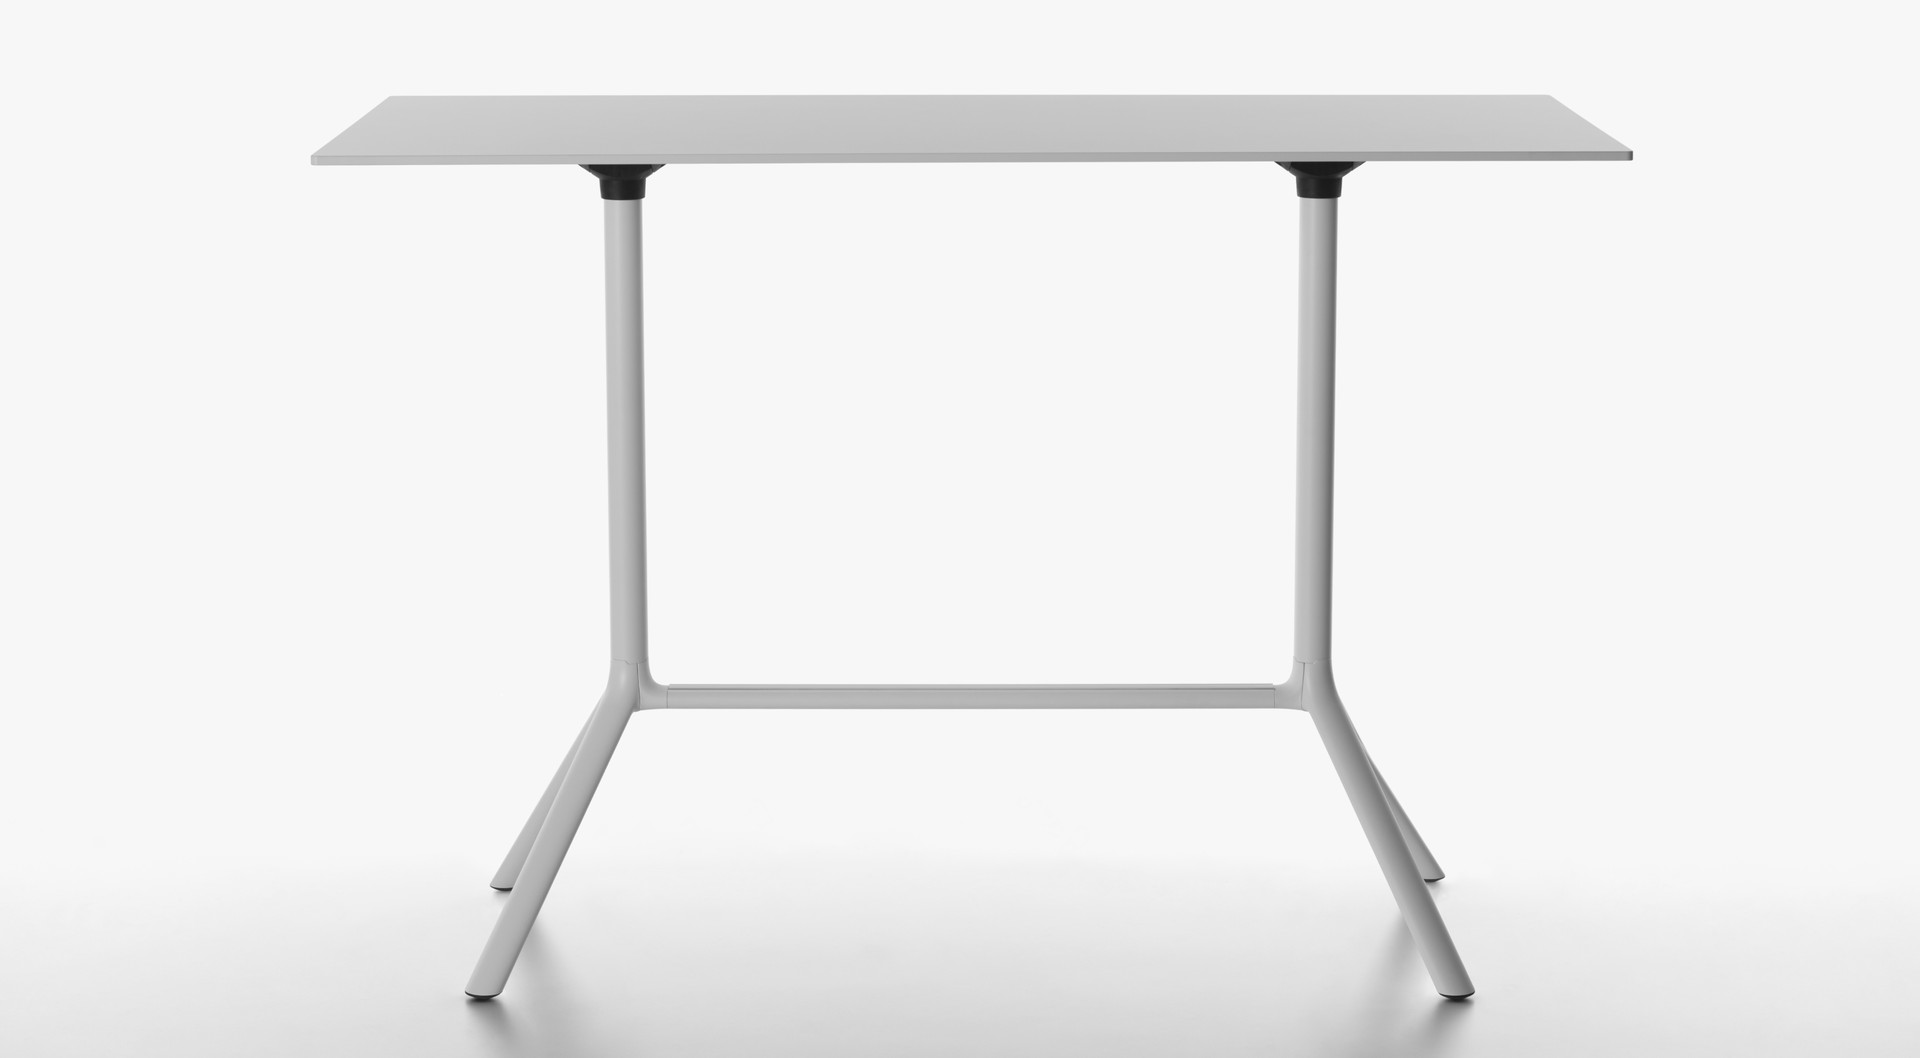 Plank - MIURA table rectangular table top, 103 cm high, white